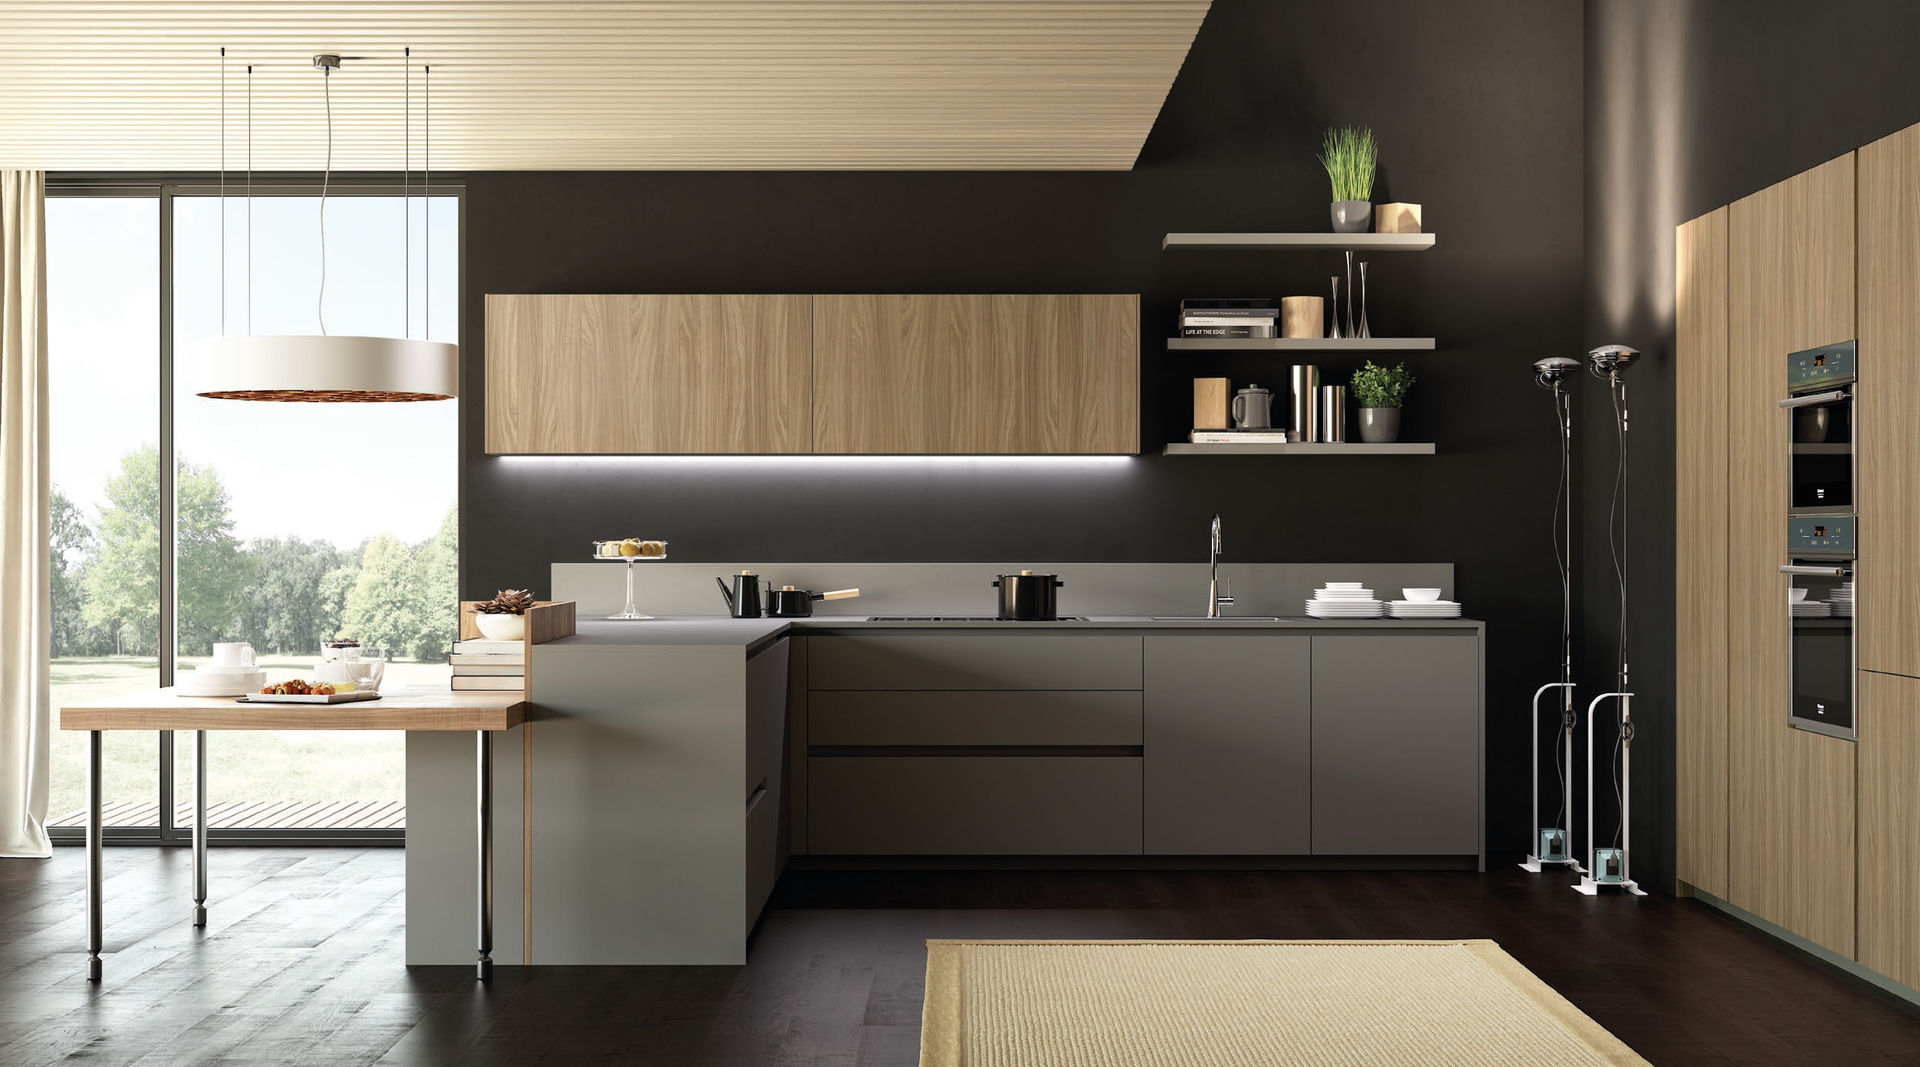 MT210 fenix / SINCRO wood 義葳德名廚 E-CUCINE 現代廚房設計點子、靈感&圖片 MDF 廚房,廚具,廚房設計,廚房器具